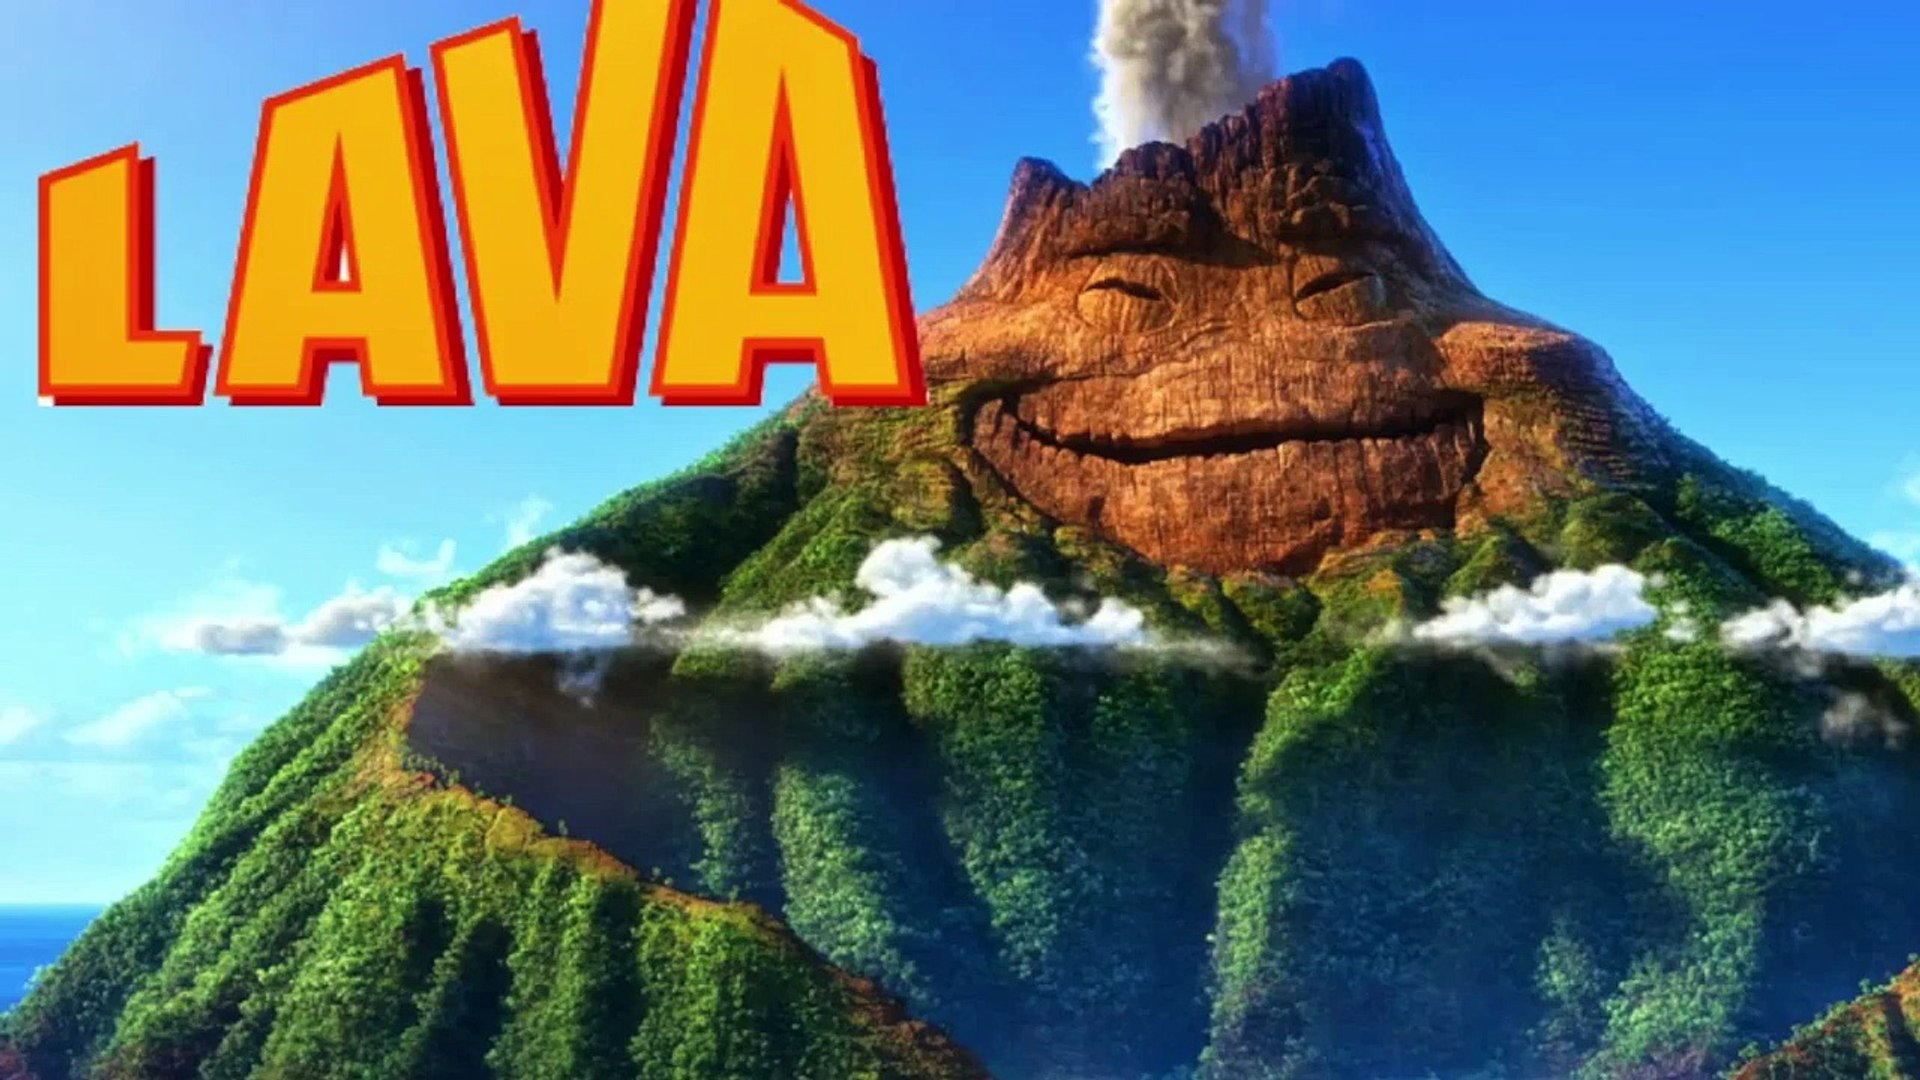 Disney pixar short lava